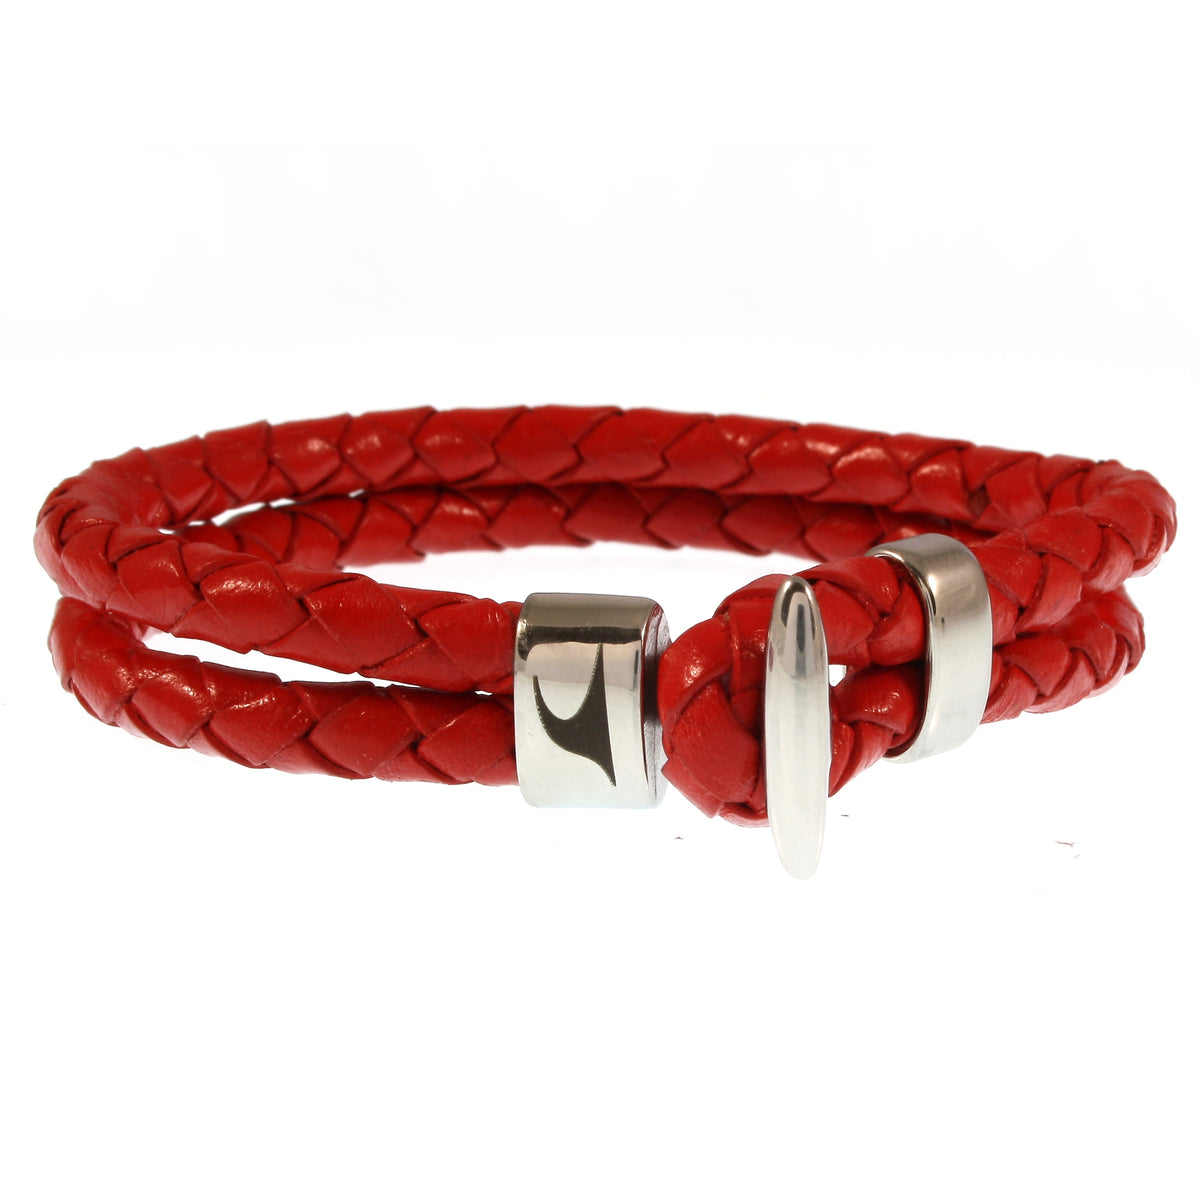 Damen-Leder-Armband-Aruba-rot-geflochten-Edelstahlverschluss-vorn-wavepirate-shop-f